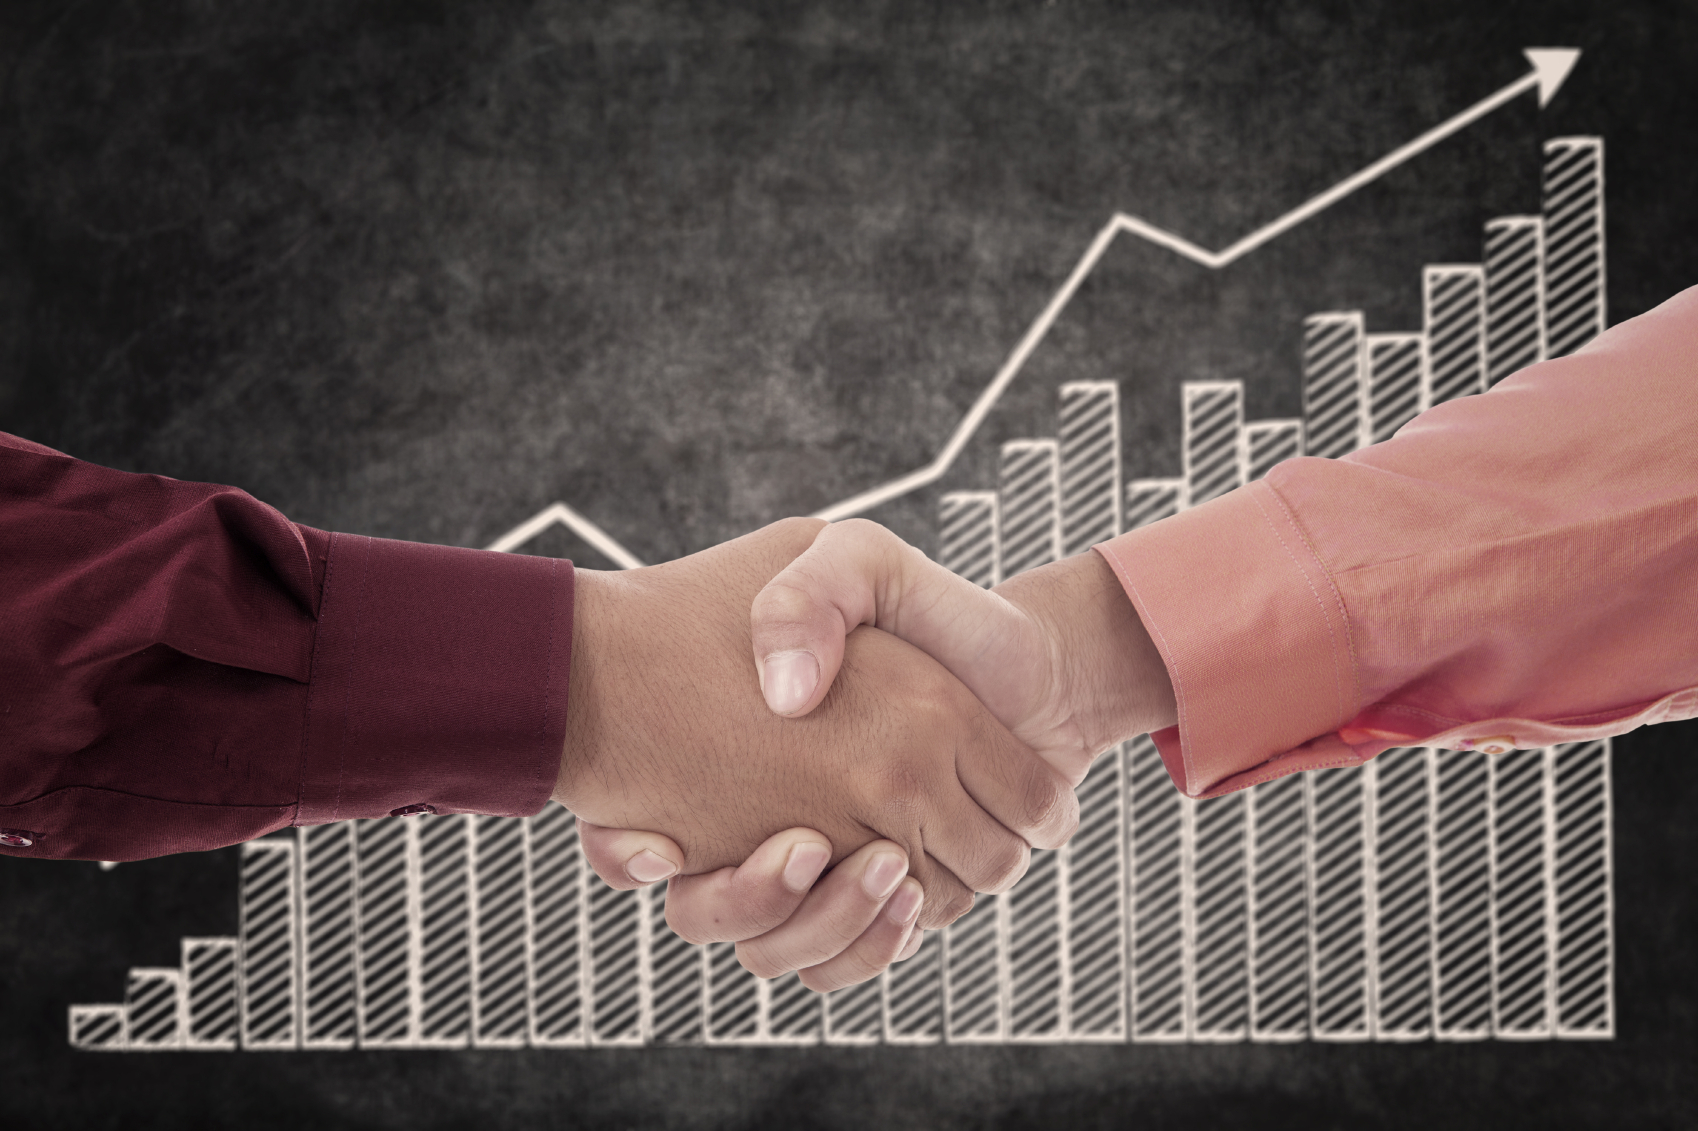 Handshake between two businessmen upon successful transactions